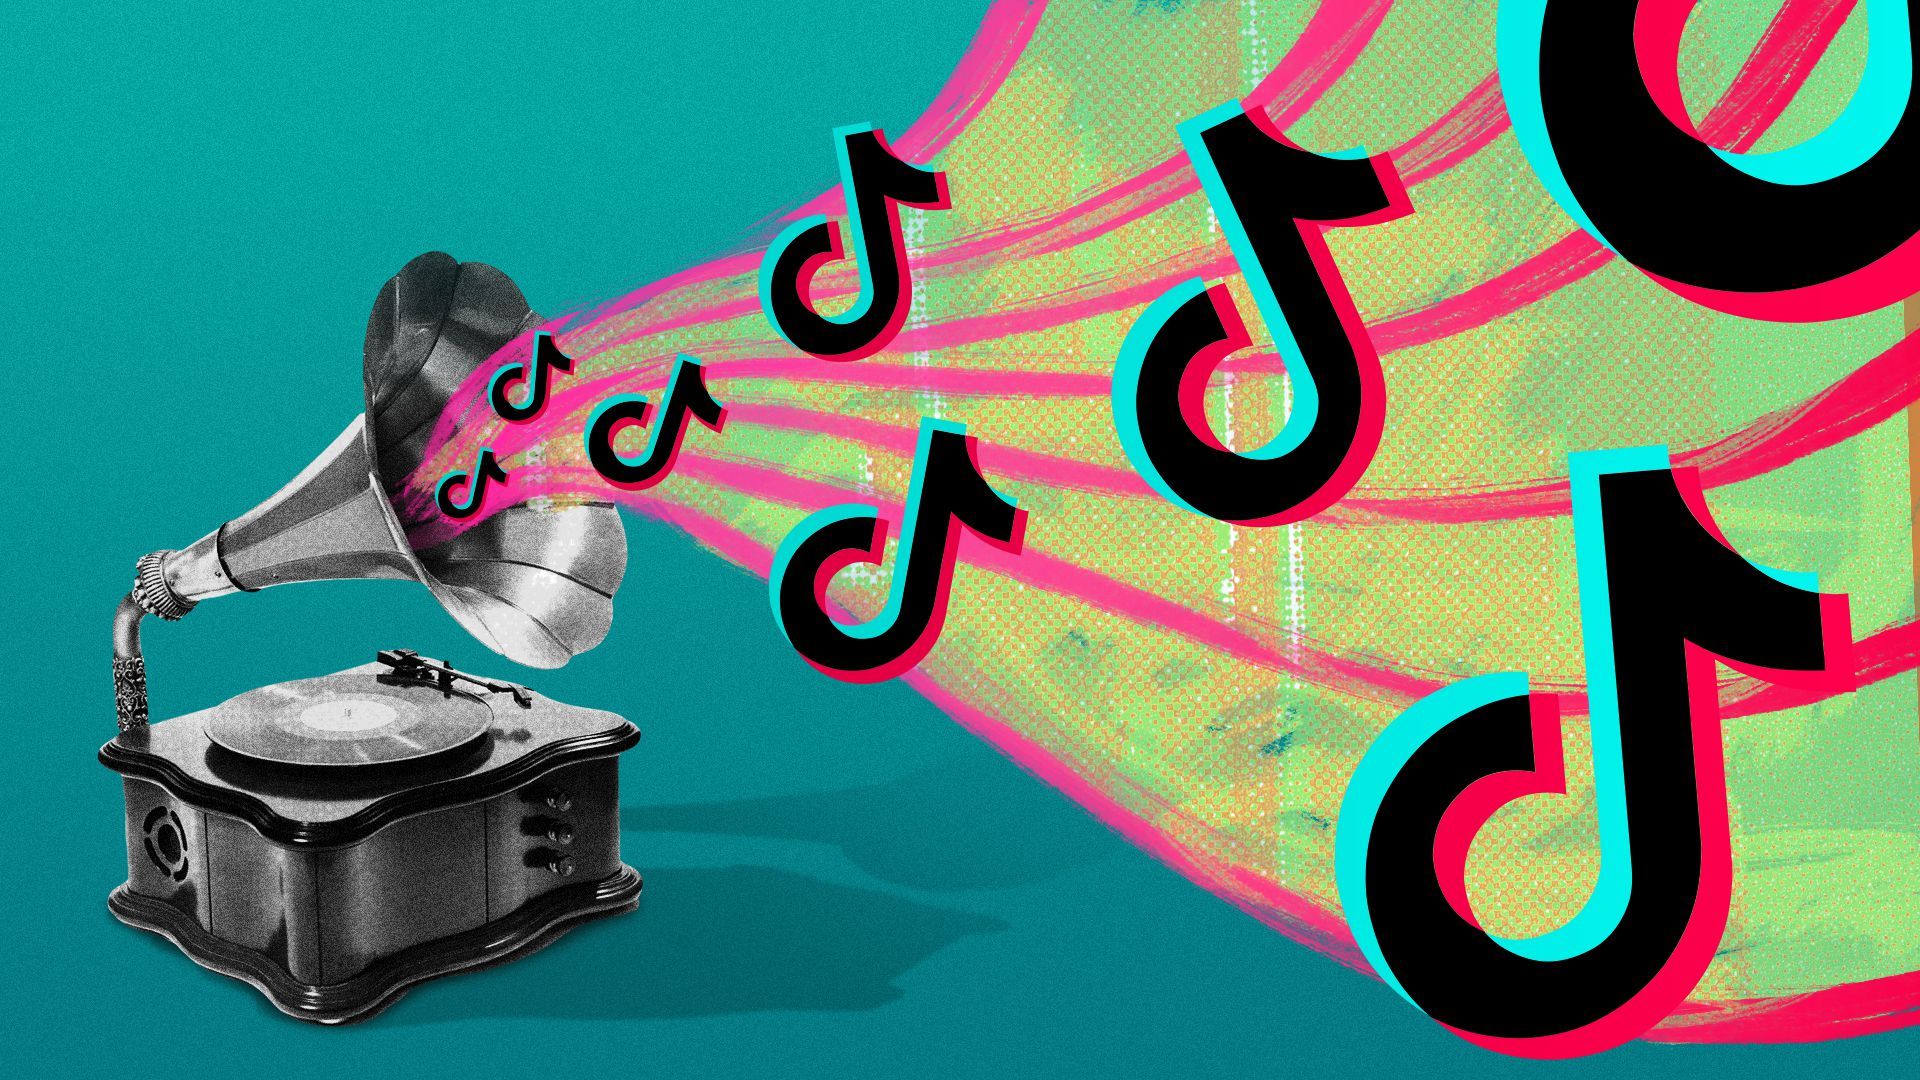 Illustration of a gramophone playing music with Tik Tok’s logo.